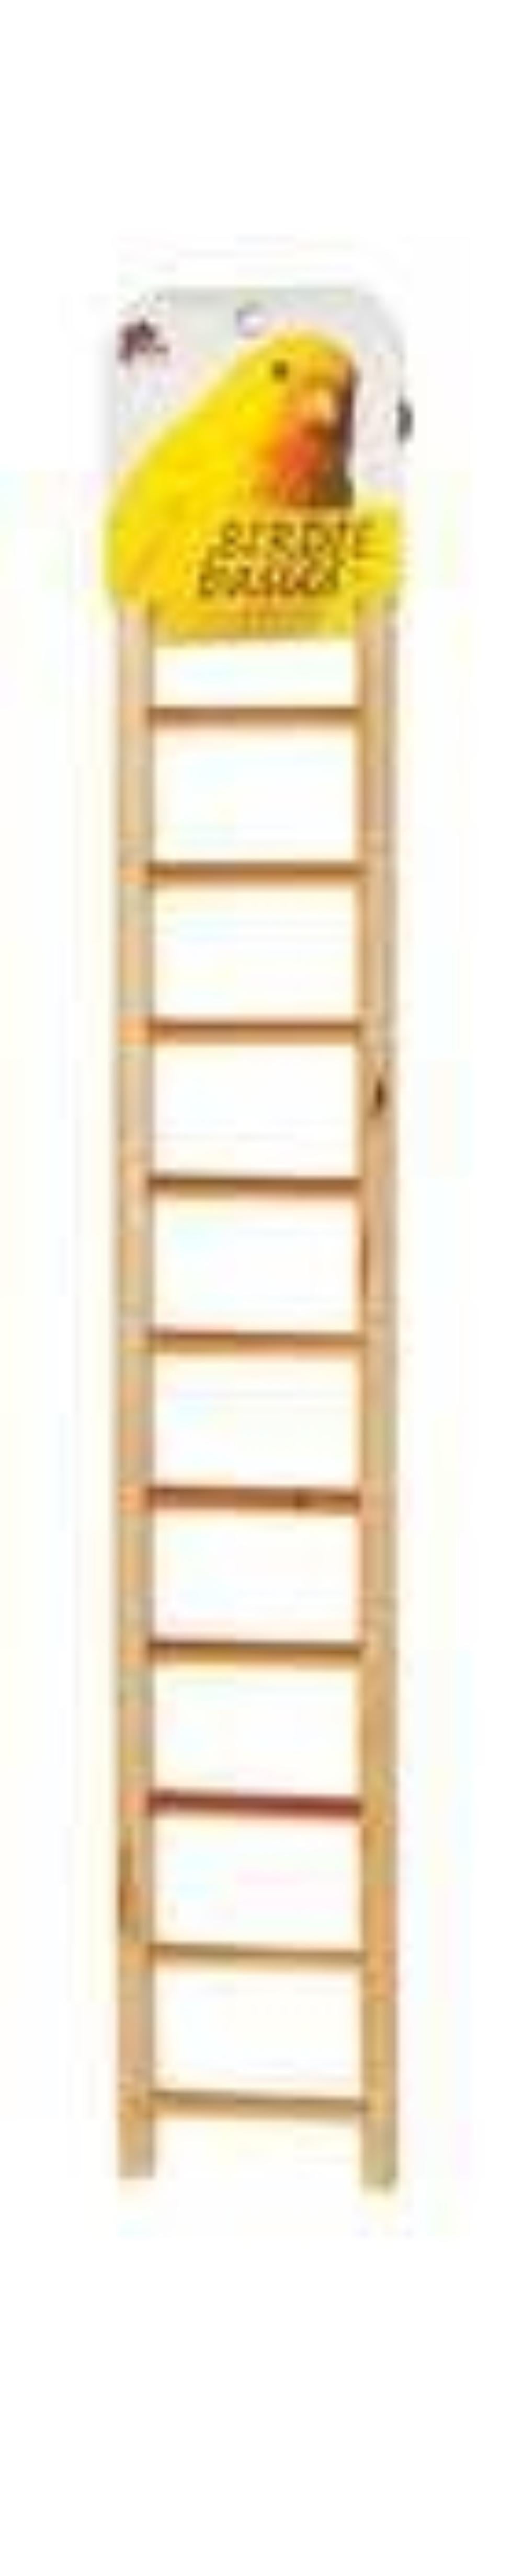 Prevue Pet Products BPV386 Birdie Basics 11-Step Wood Ladder for Bird 17-Inch 